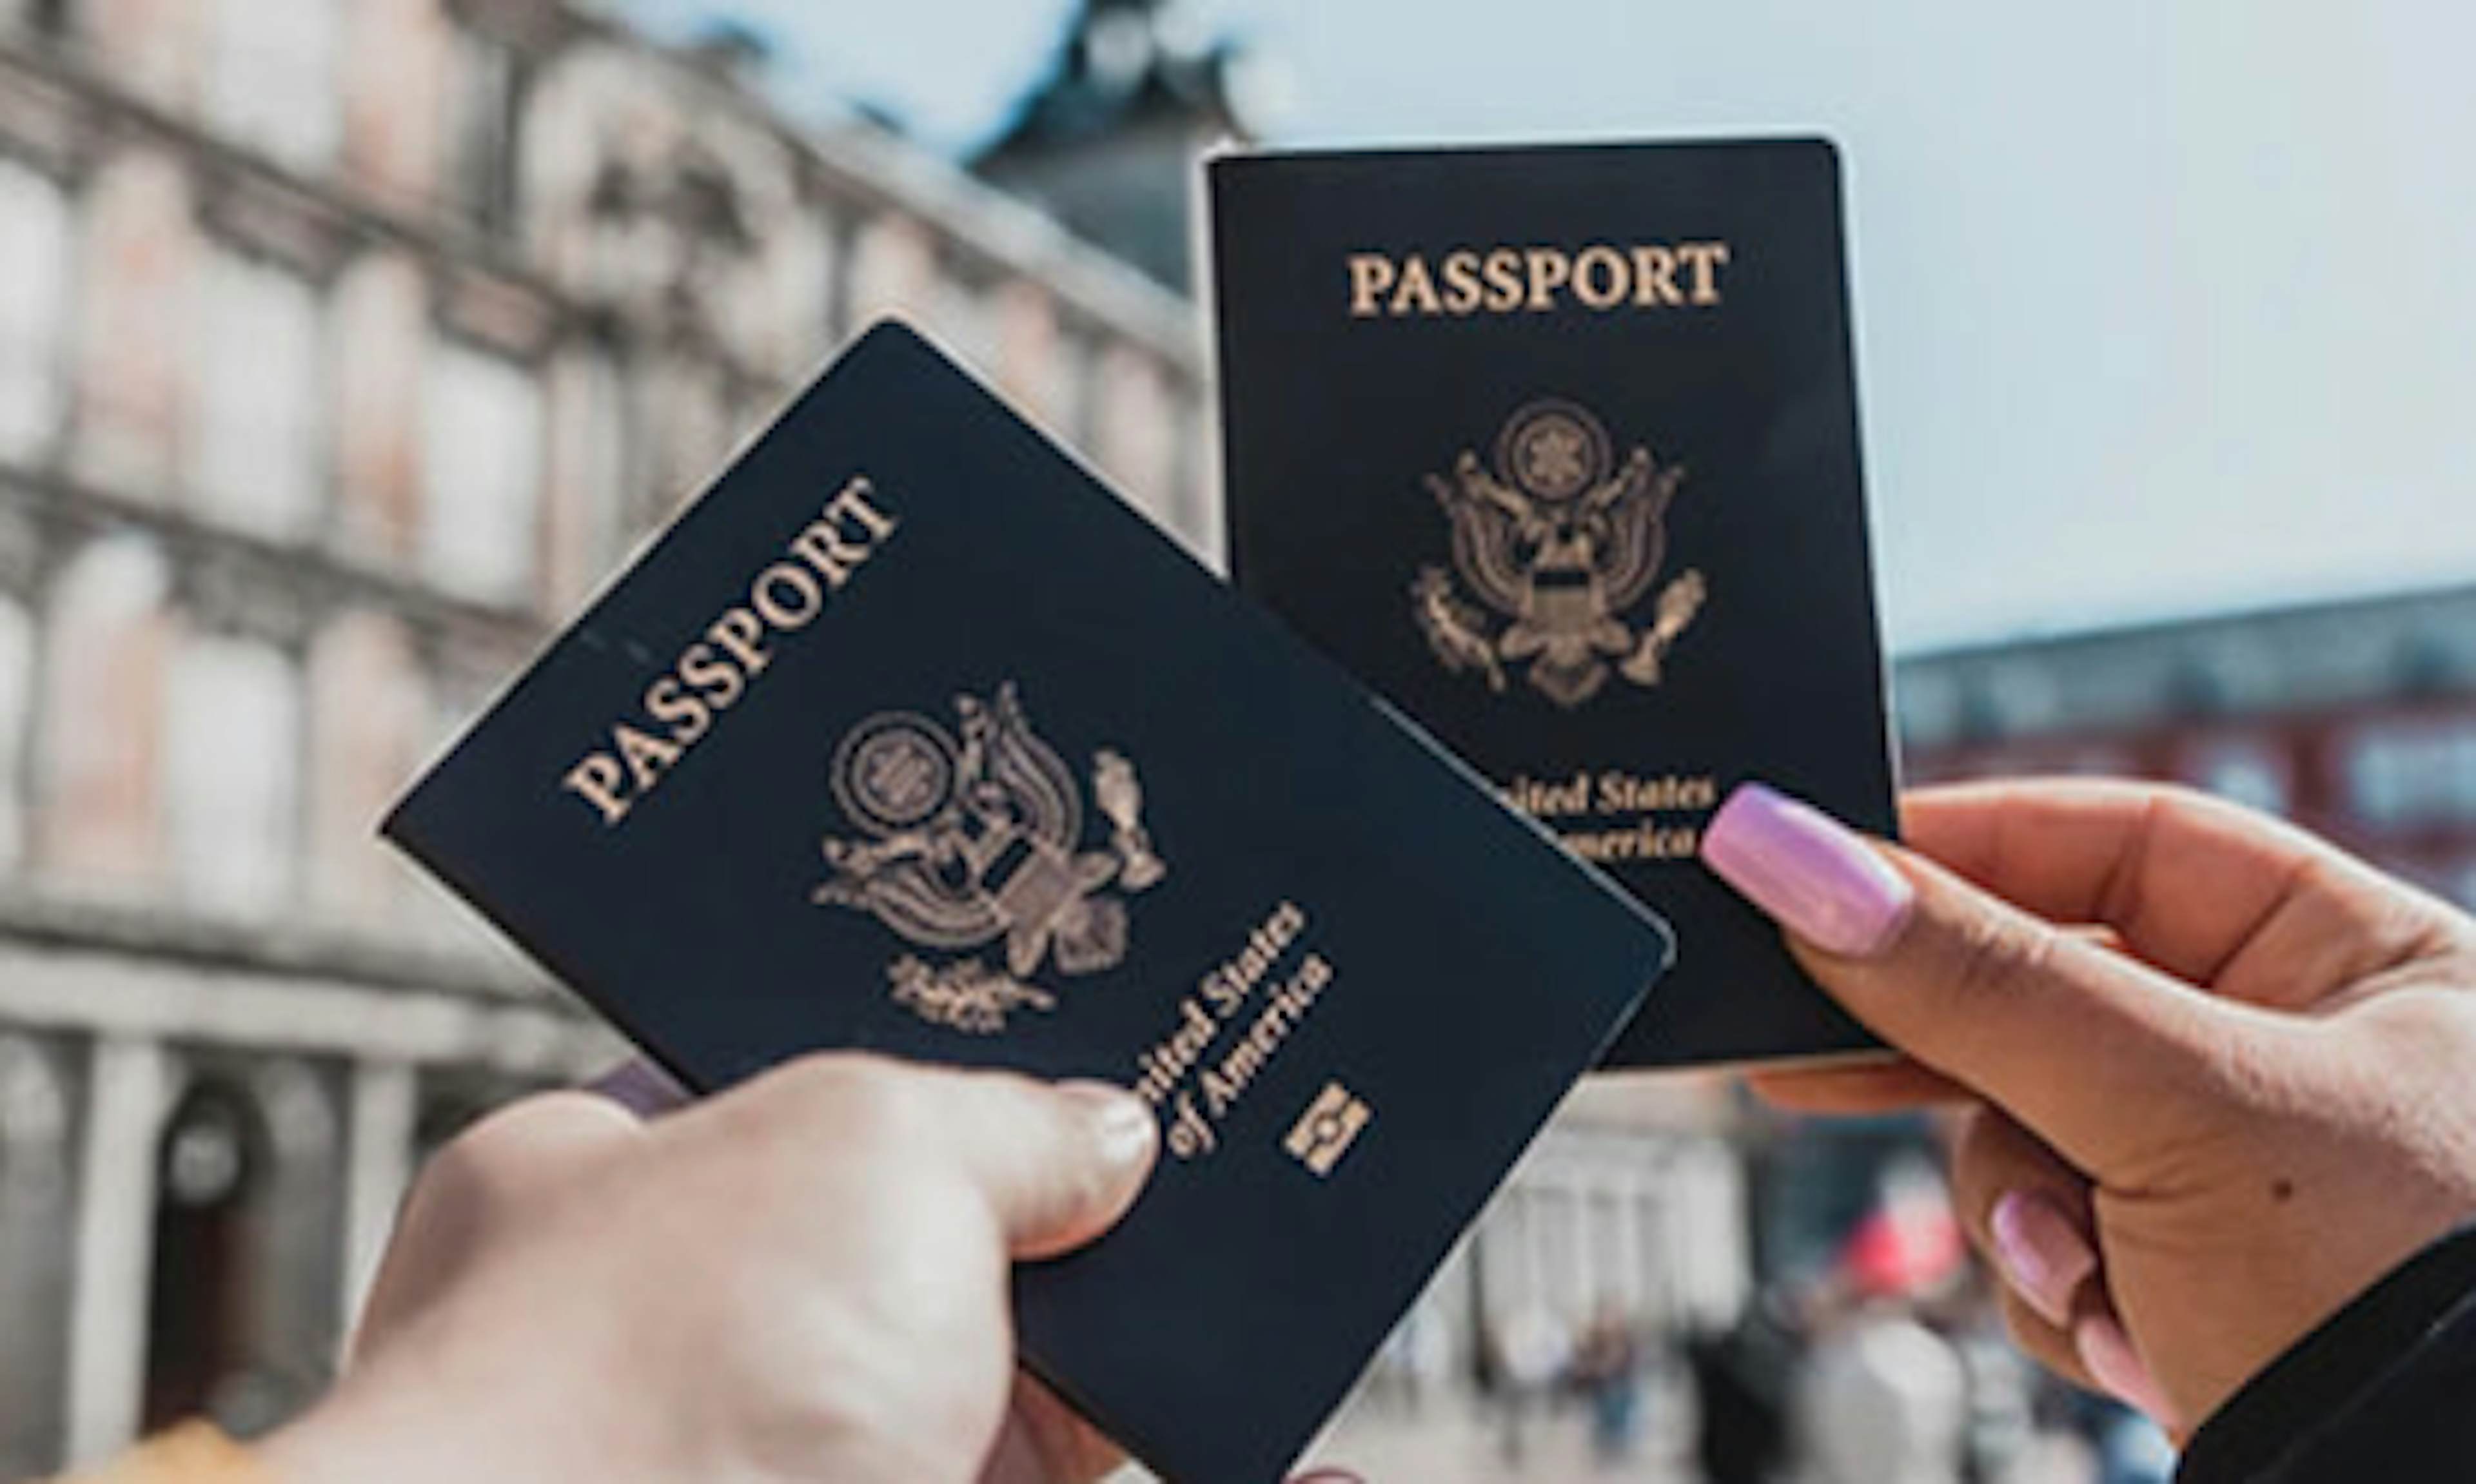 Man and women holding up 2 US passports